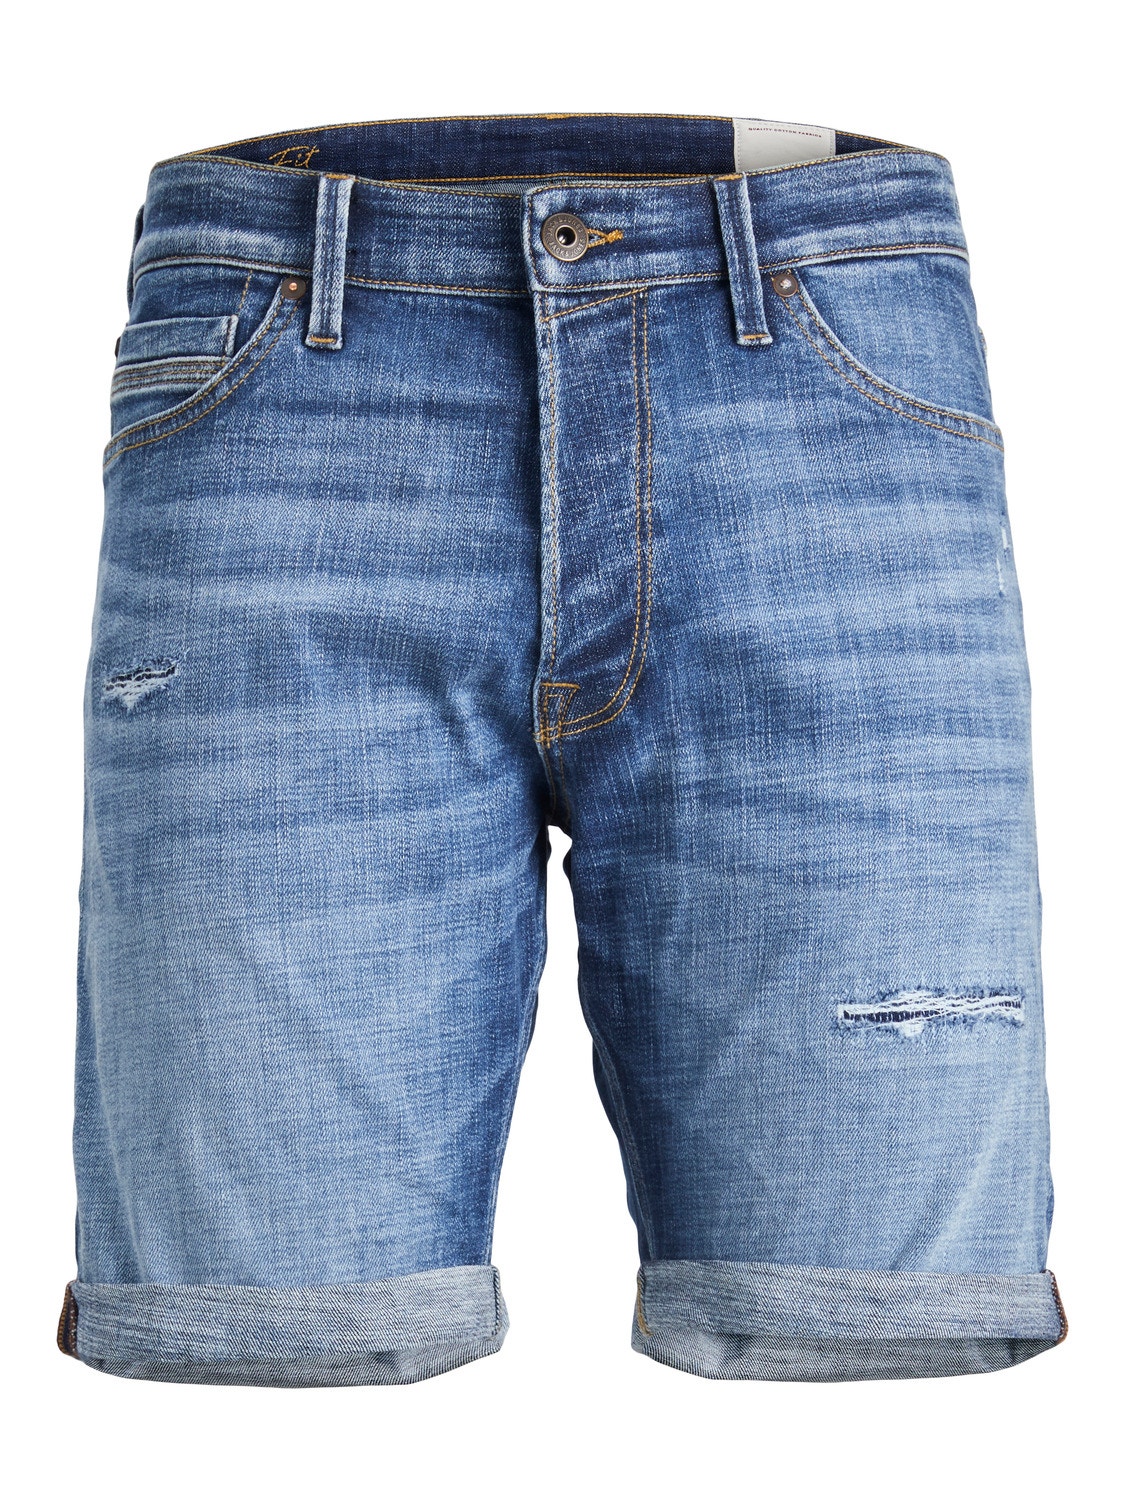 Jack & Jones Relaxed Fit Jeans Shorts -Blue Denim - 12236196